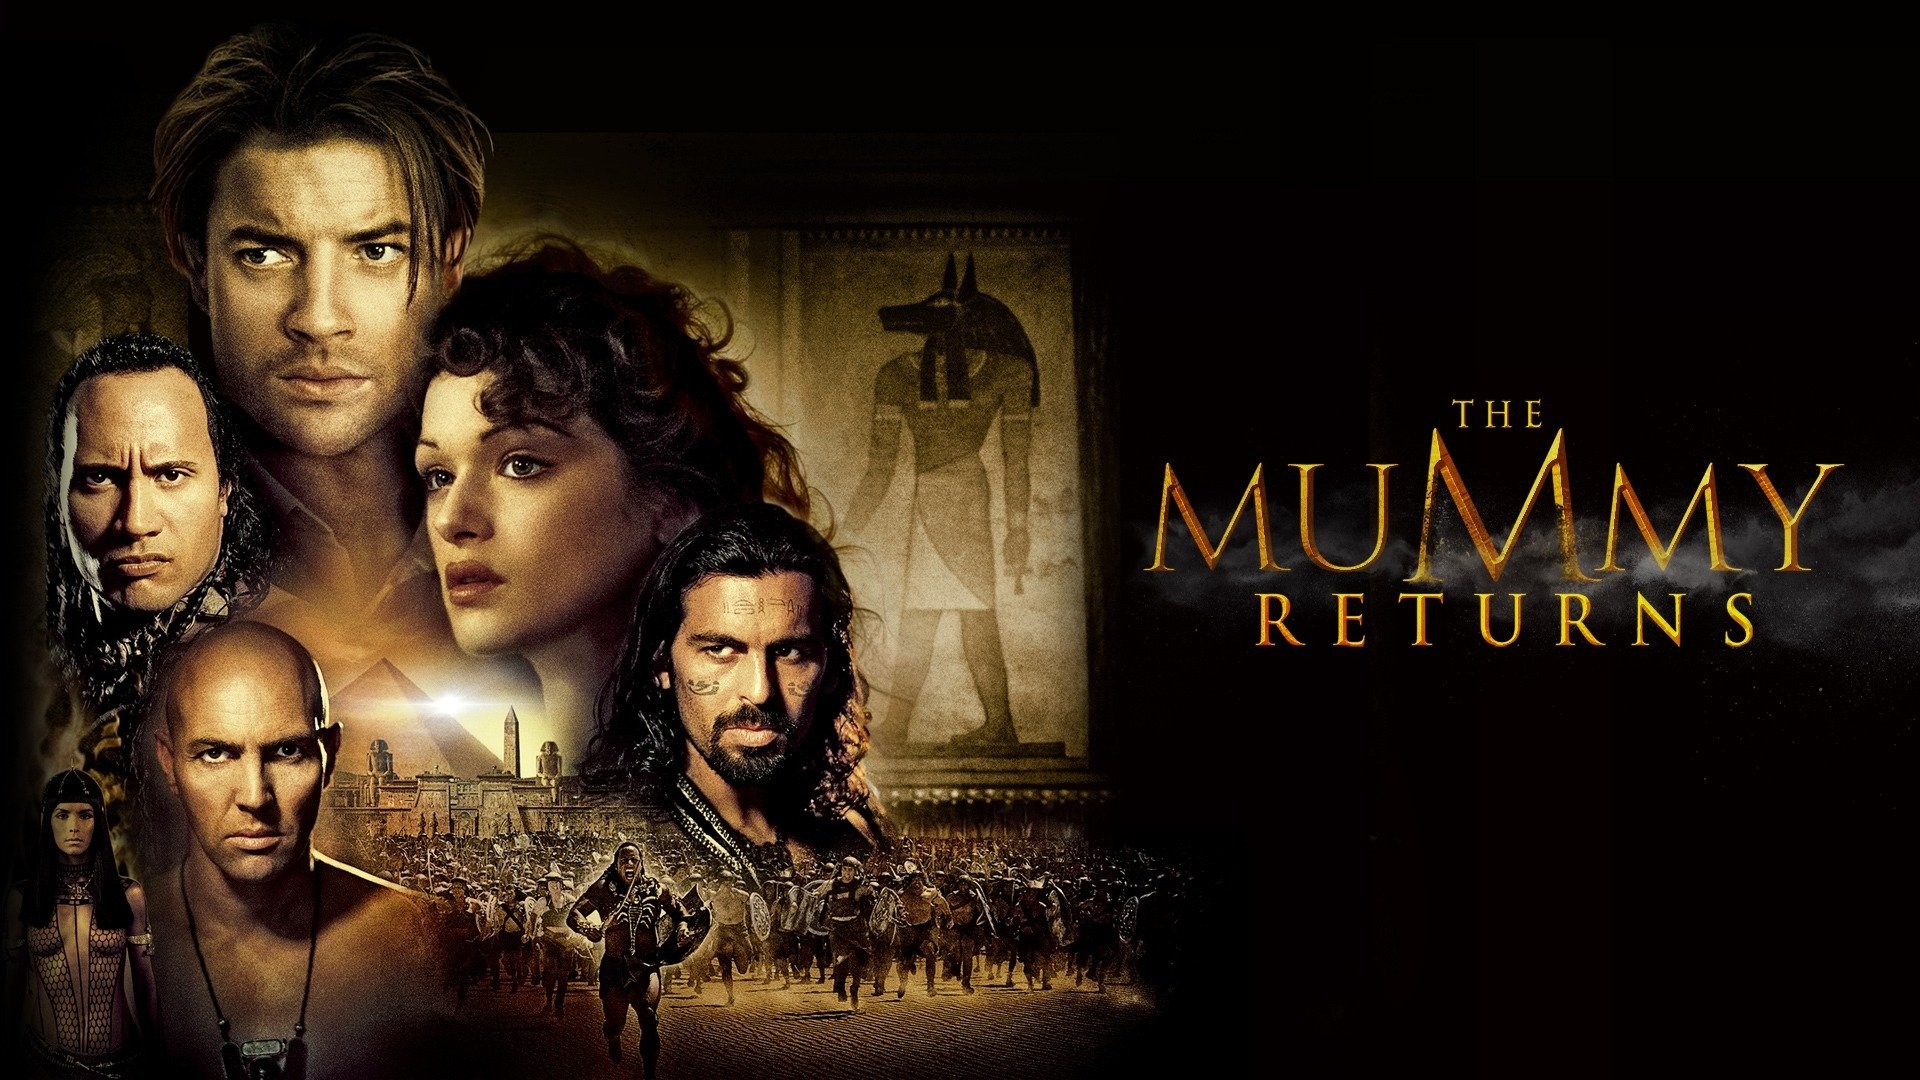 The Mummy Returns, Watch full movie, Entertaining action, Intense battles, 1920x1080 Full HD Desktop